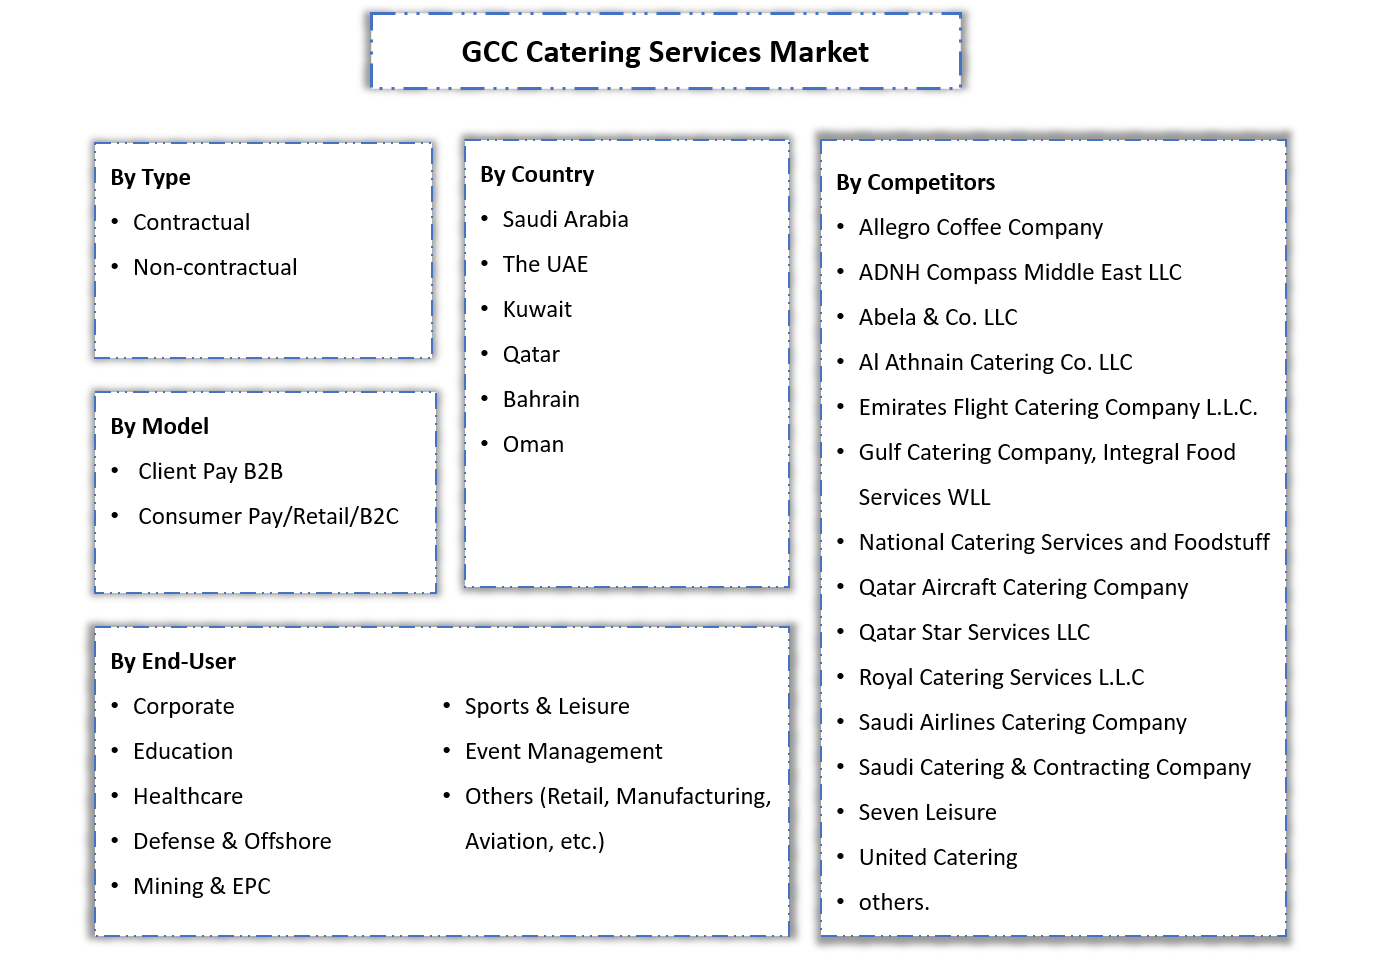 GCC Catering Services Market Segmentation Slide